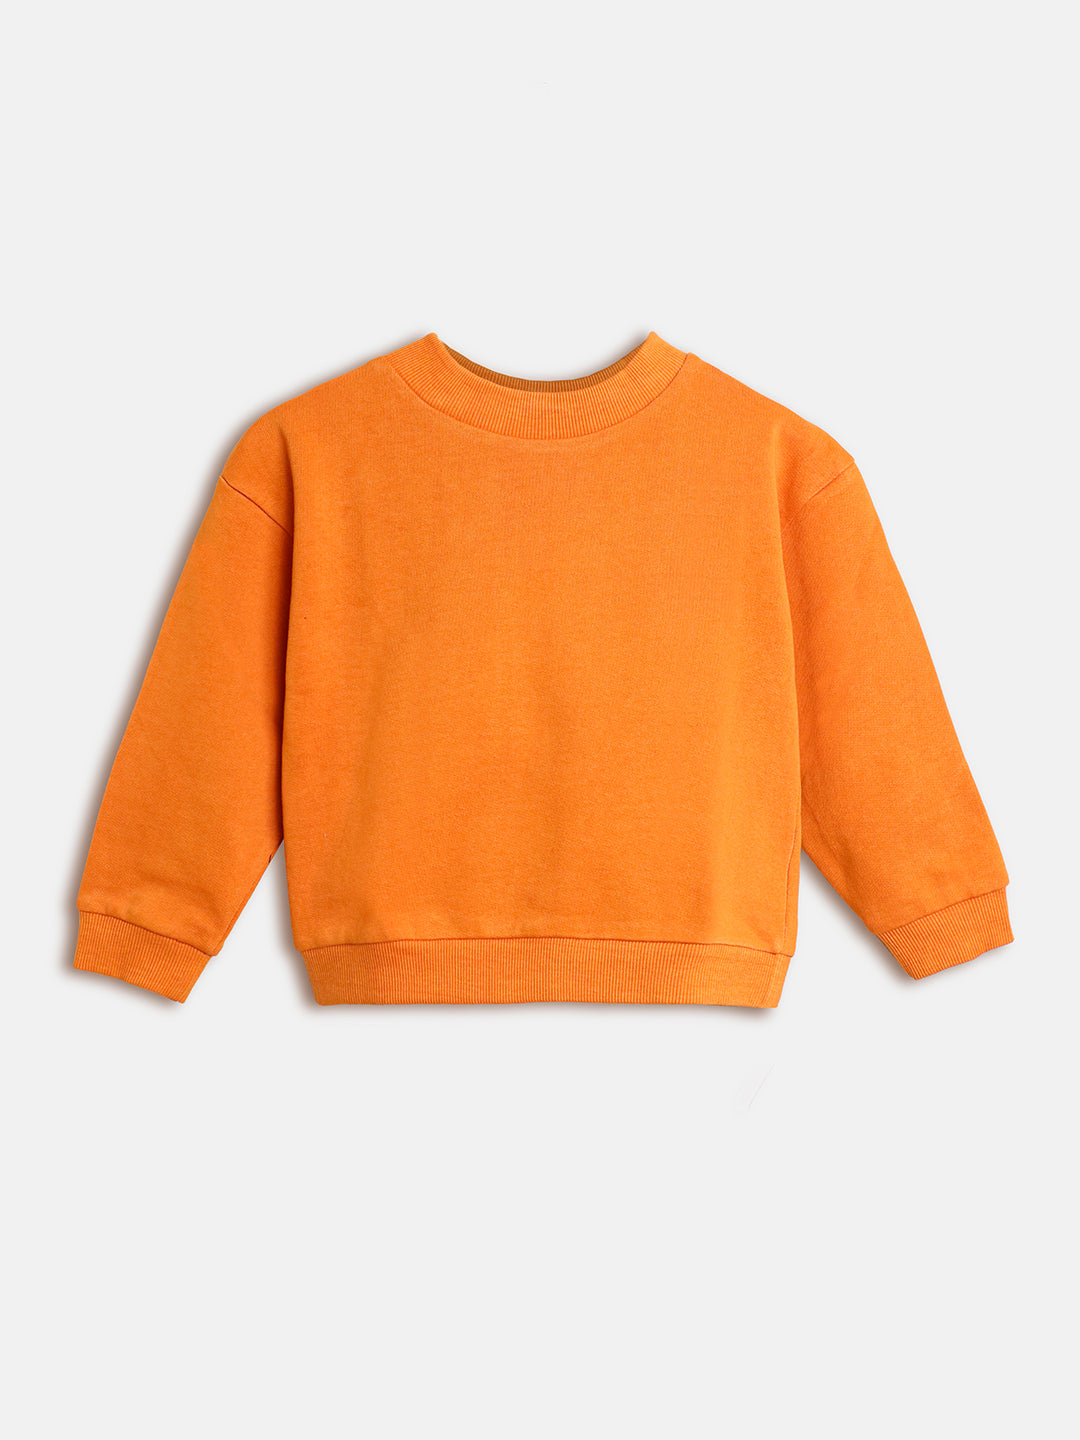 Checkboard Faces Dungaree with Orange Sweatshirt